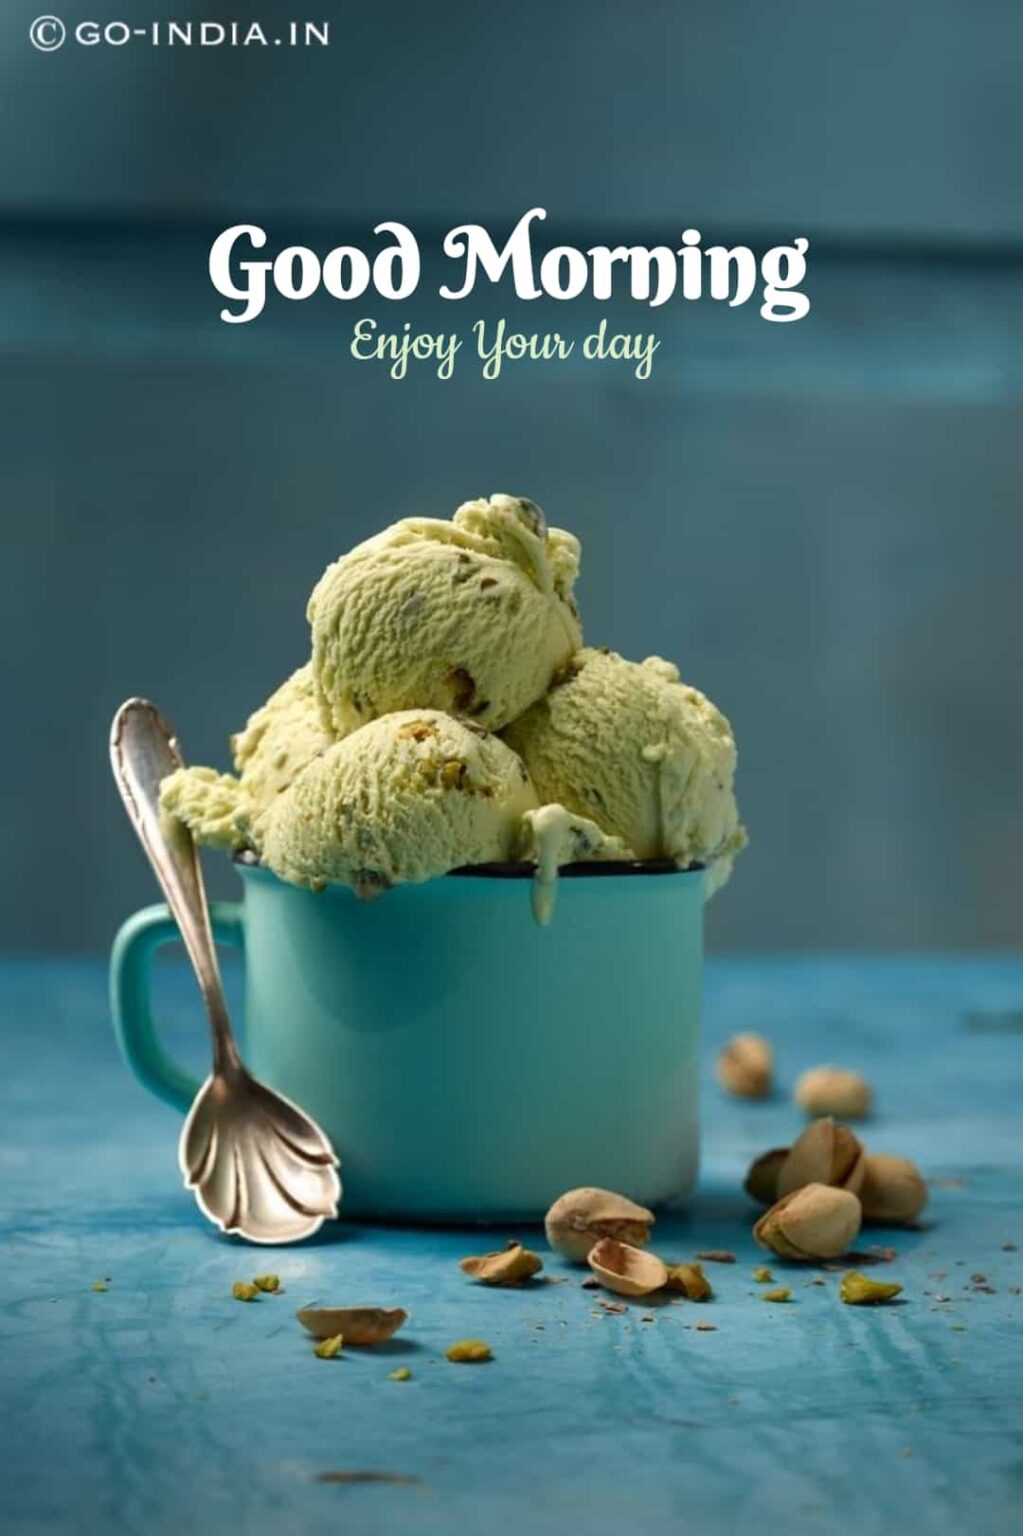 Good Morning Ice Cream Images